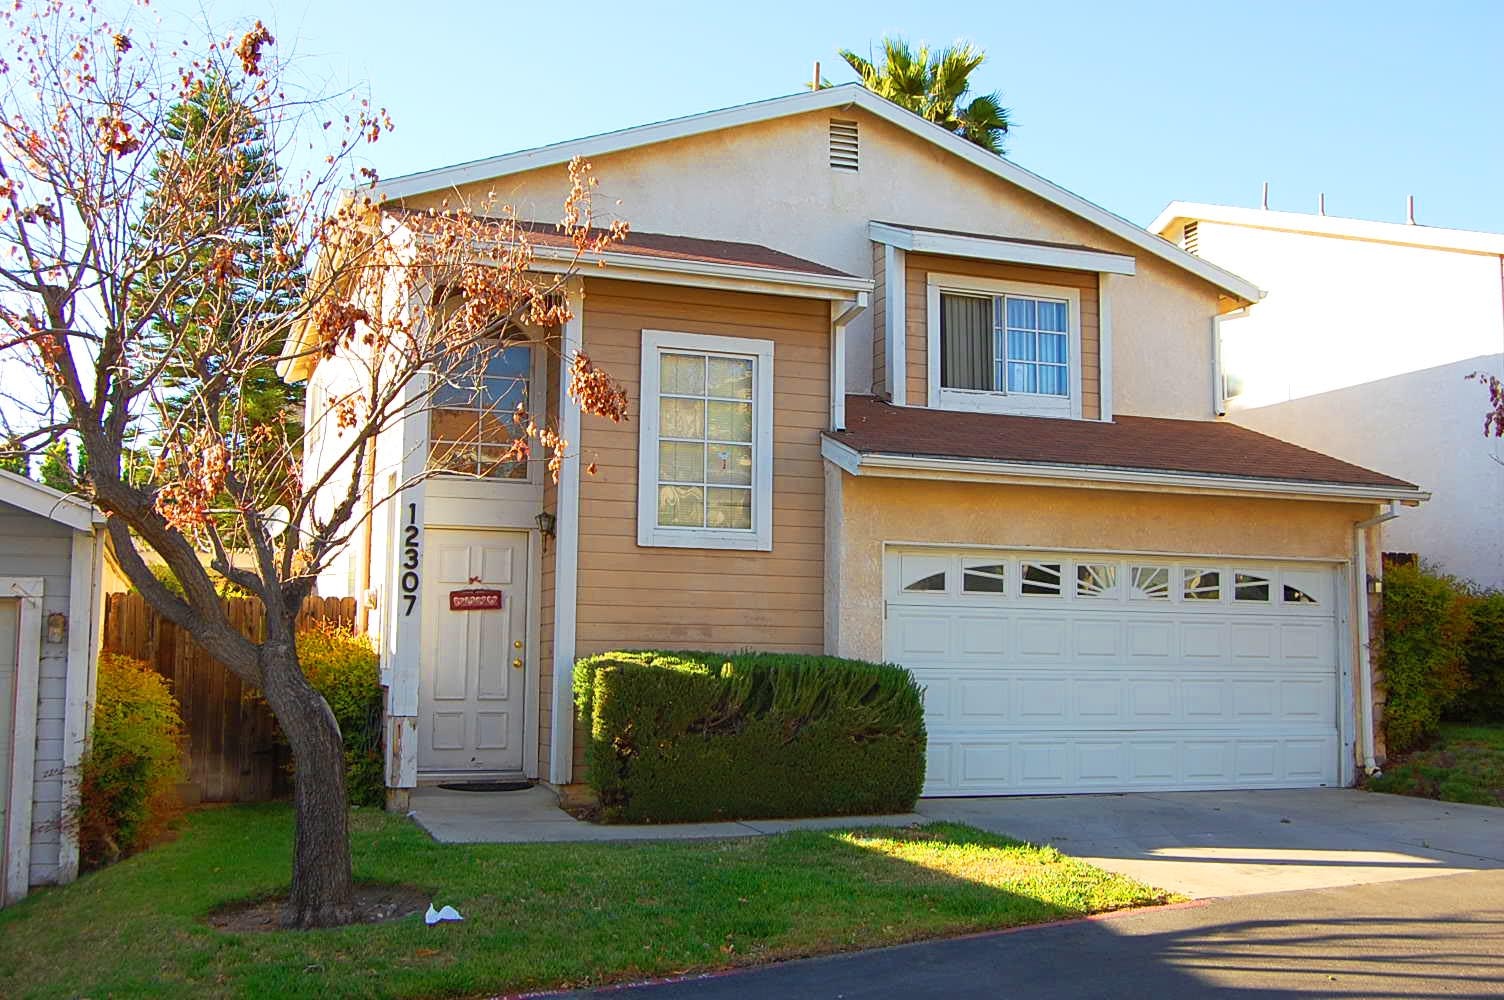 Pacoima Short Sale | Pacoima Home for Sale | 12307 Clover Road, Pacoima, California | Pacoima Real Estate